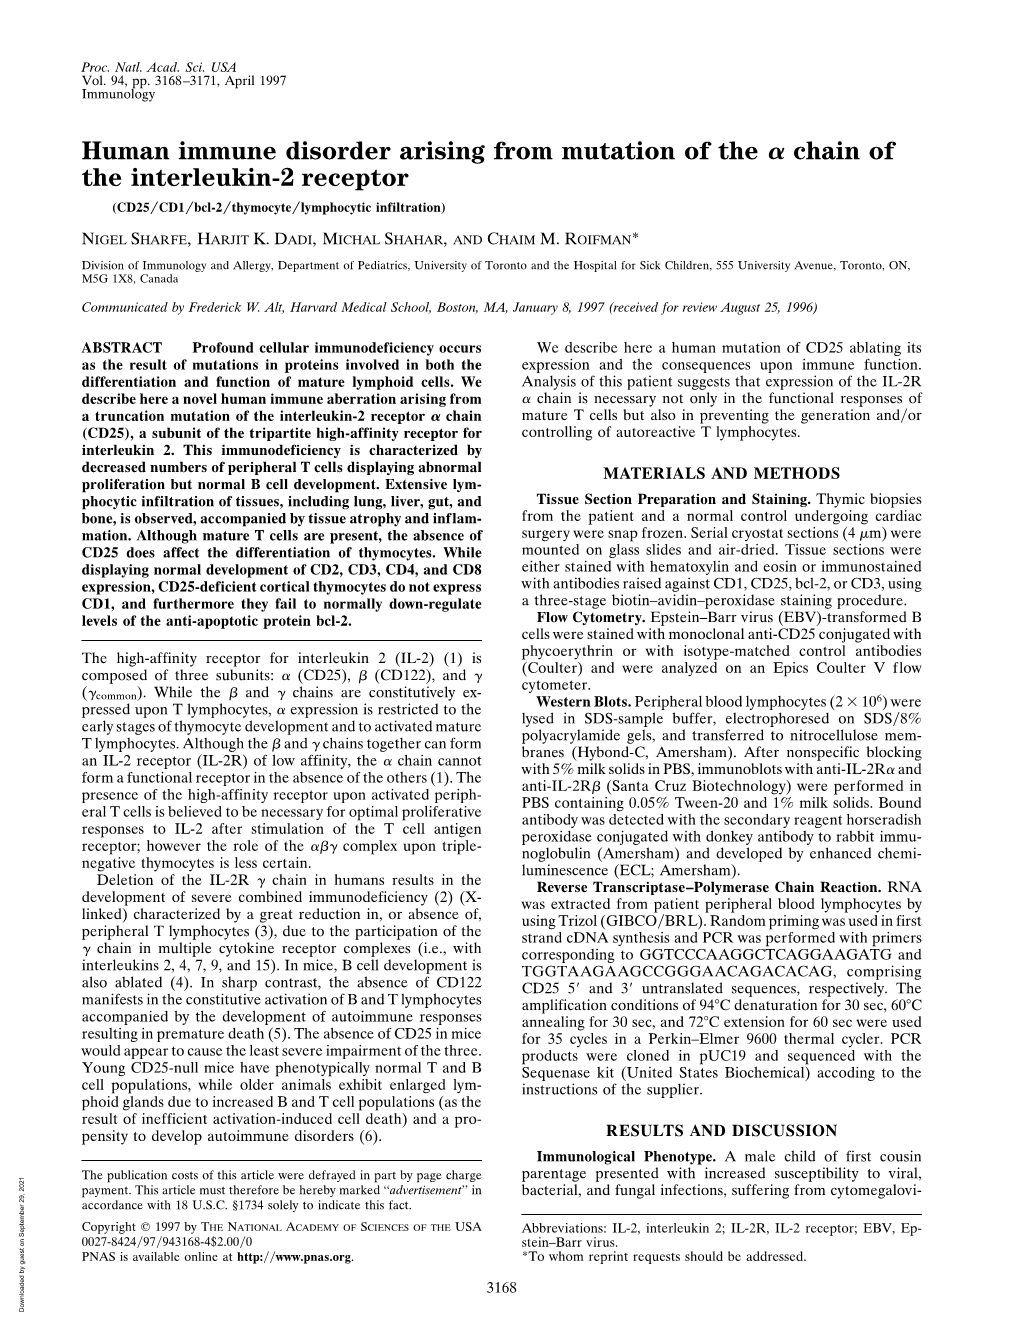 Human Immune Disorder Arising from Mutation of the Chain of the Interleukin-2 Receptor